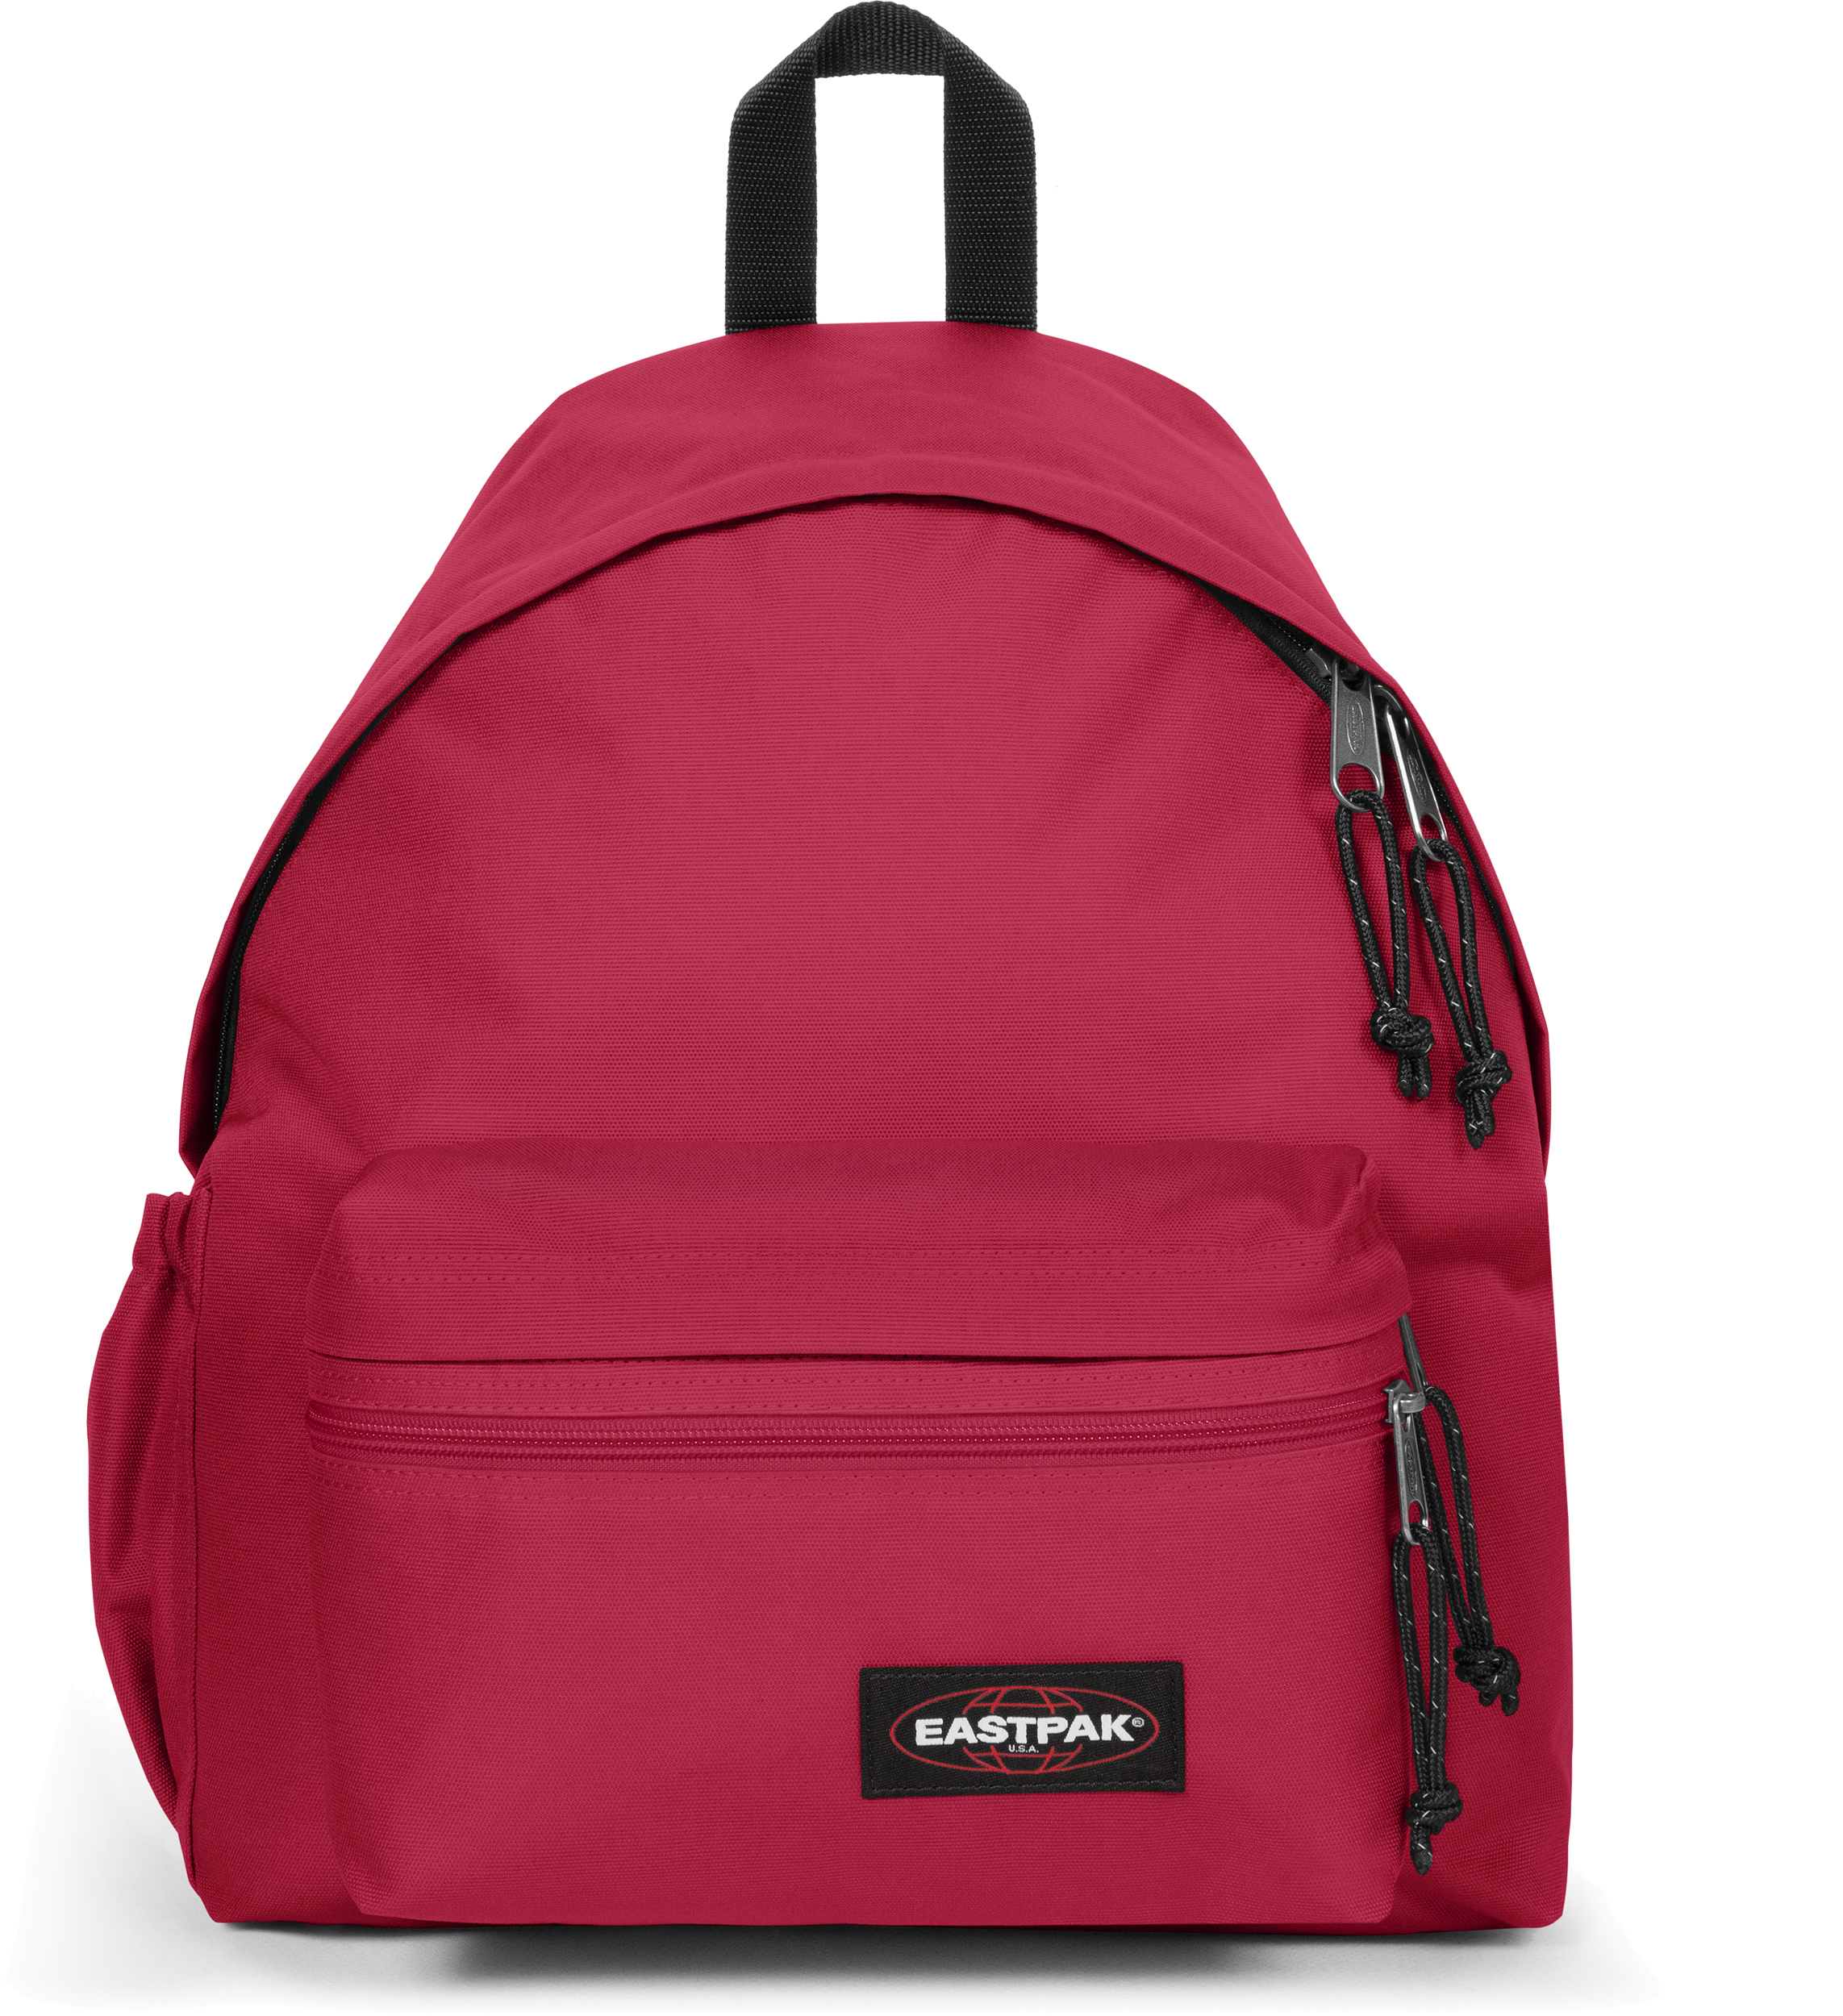 Eastpak Backpacks | Stock, Shipped from Cornwall BackPackShop